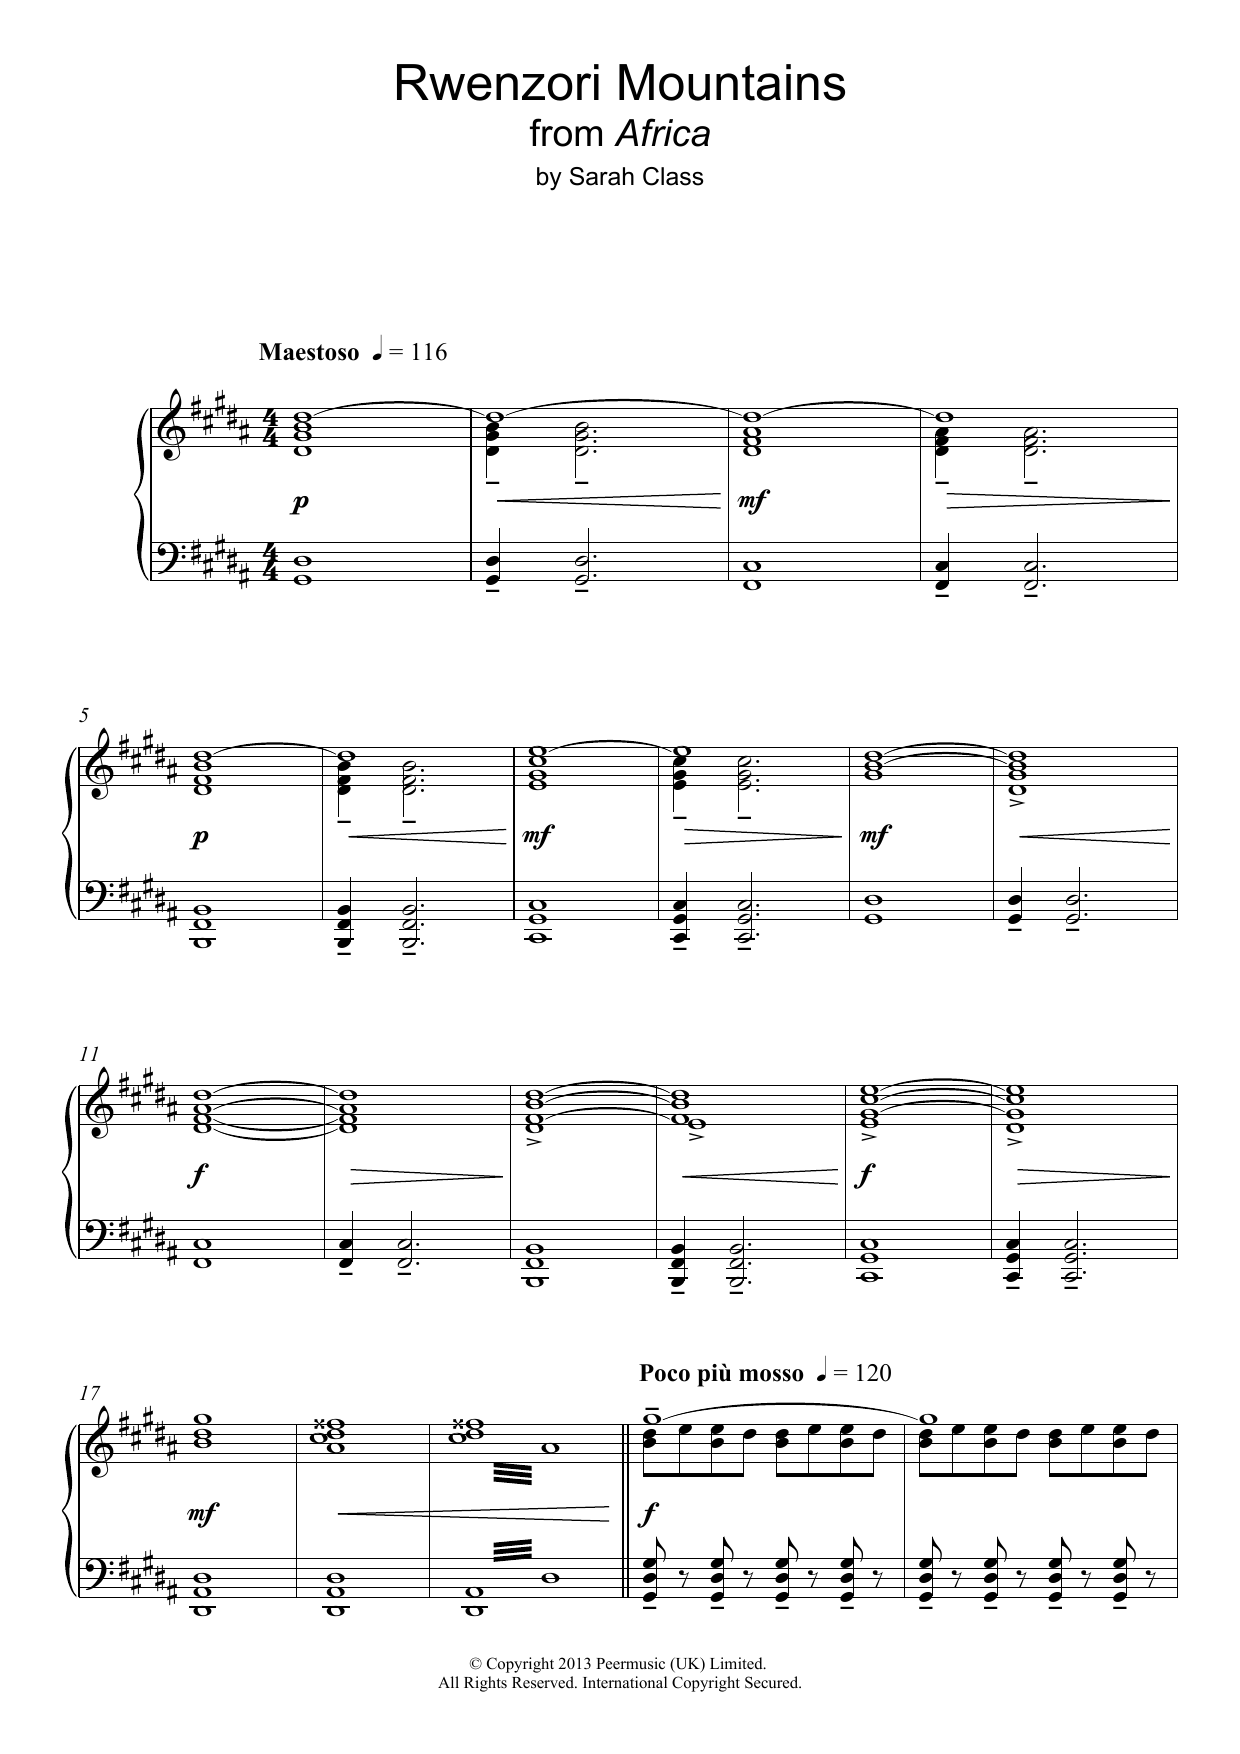 Sarah Class Rwenzori Mountains Sheet Music Notes & Chords for Piano - Download or Print PDF